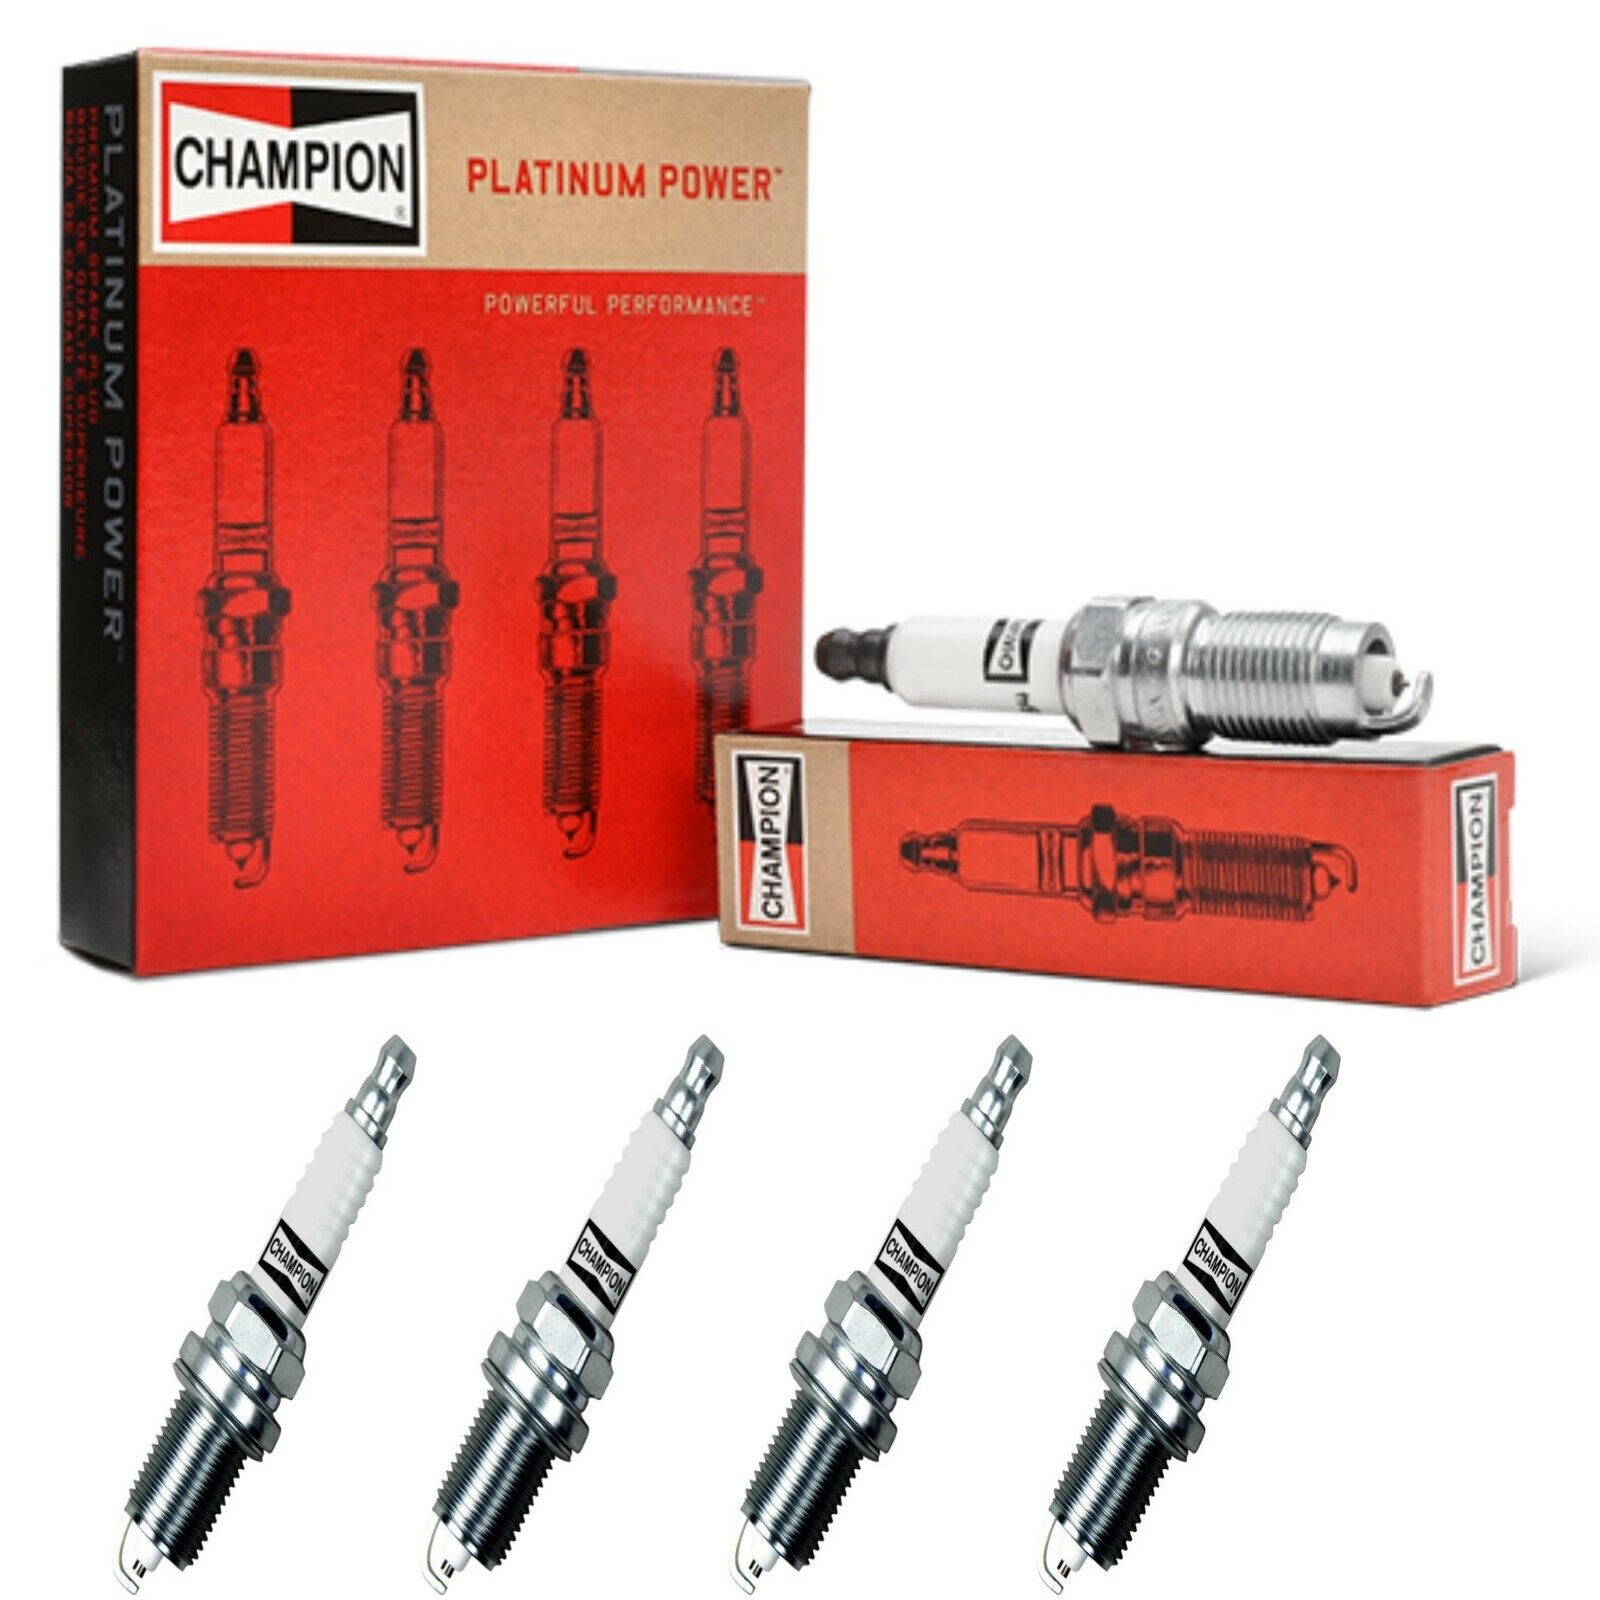 4 Champion Platinum Spark Plugs Set for HONDA CIVIC DEL SOL 1993-1997 L4-1.6L